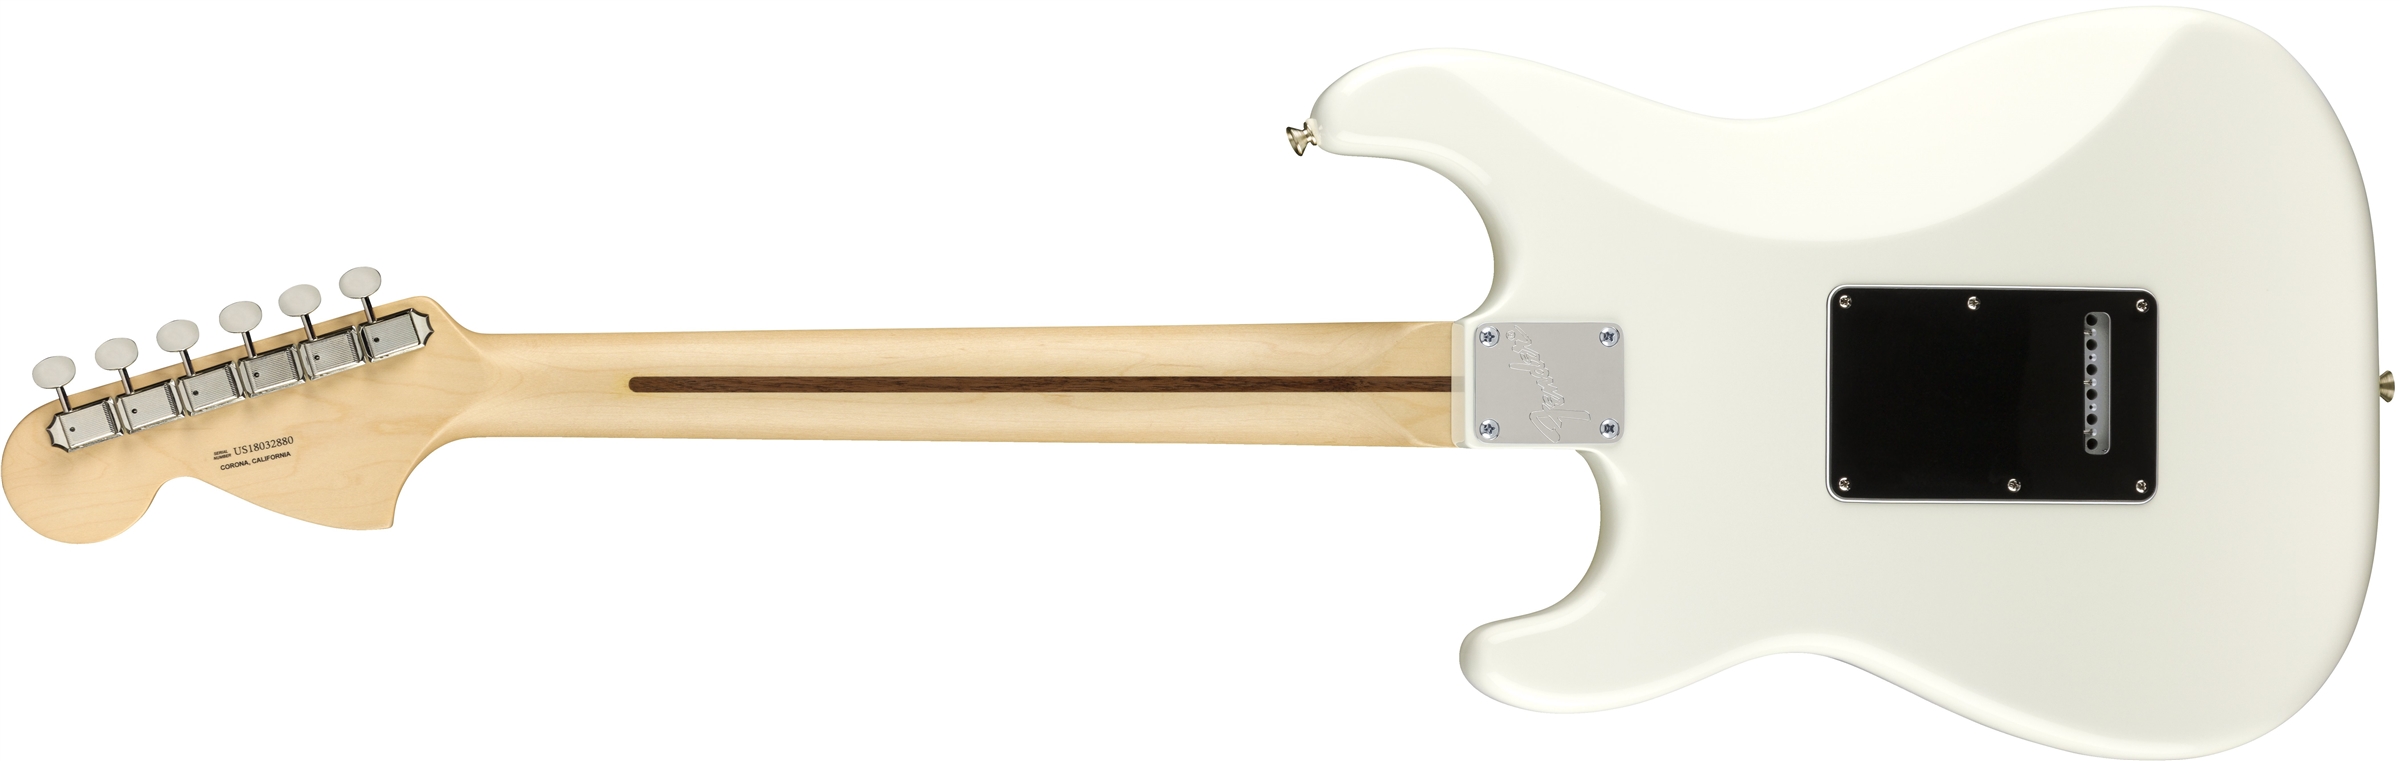 American Performer Stratocaster Arctic White背面画像